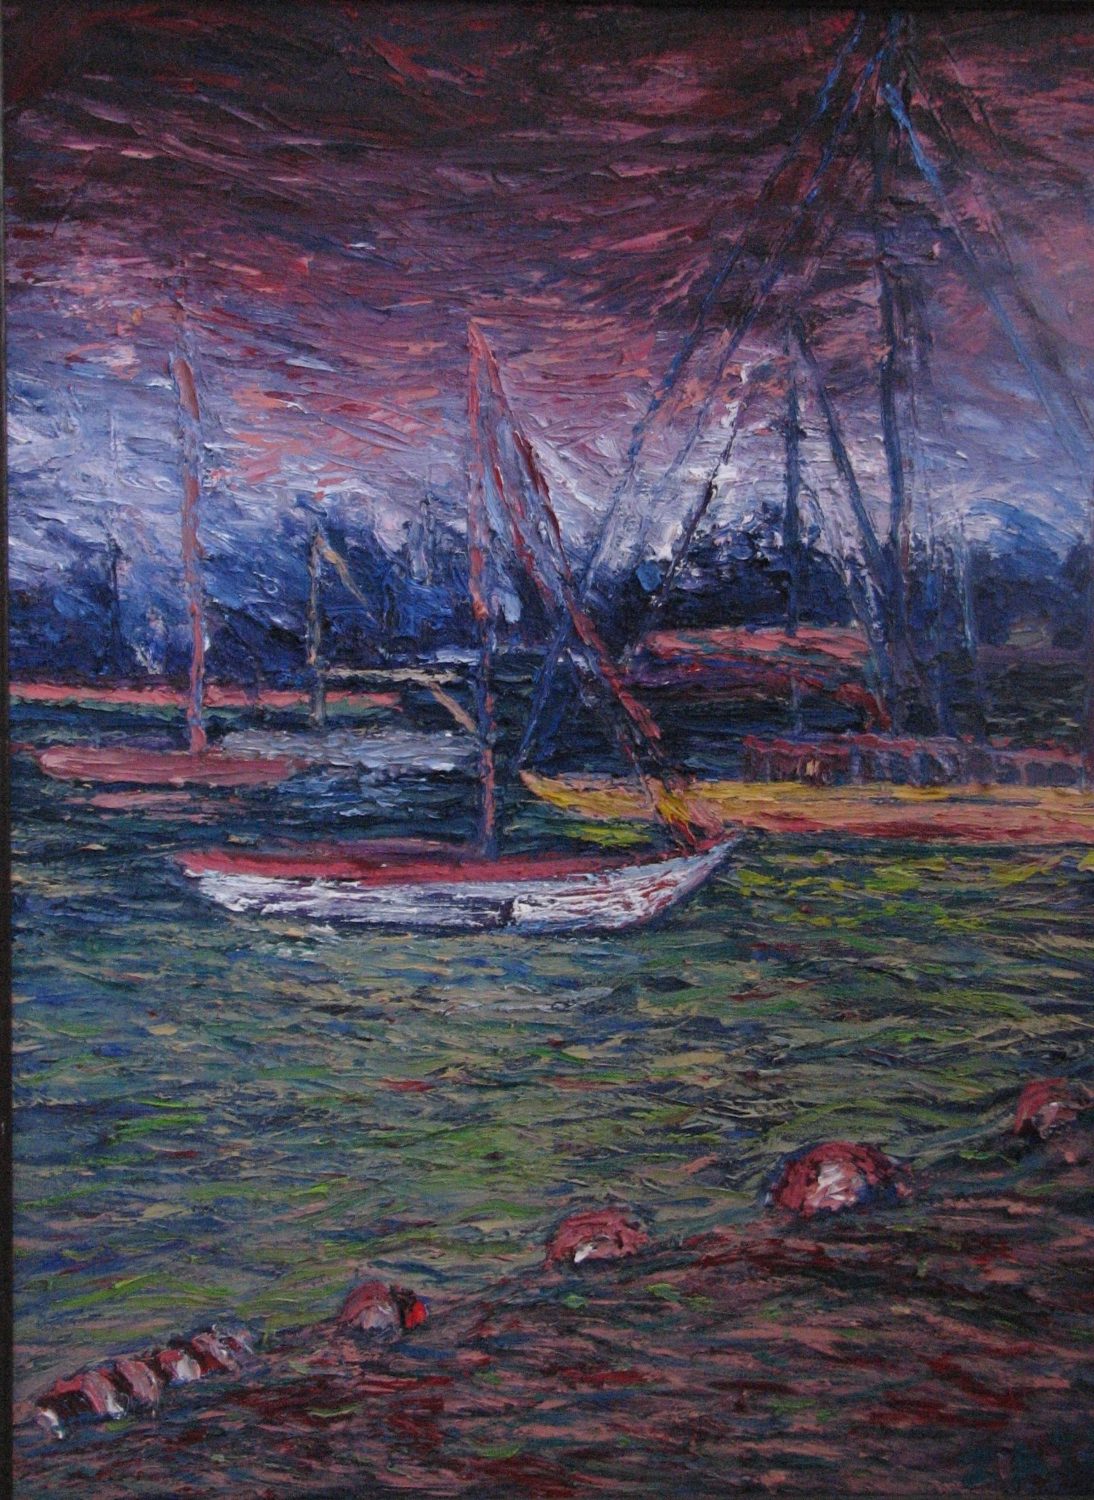 thumbnail of Anna Zatorska. medium: oil on canvas. date: 2013. dimensions: 18 x 24 inches